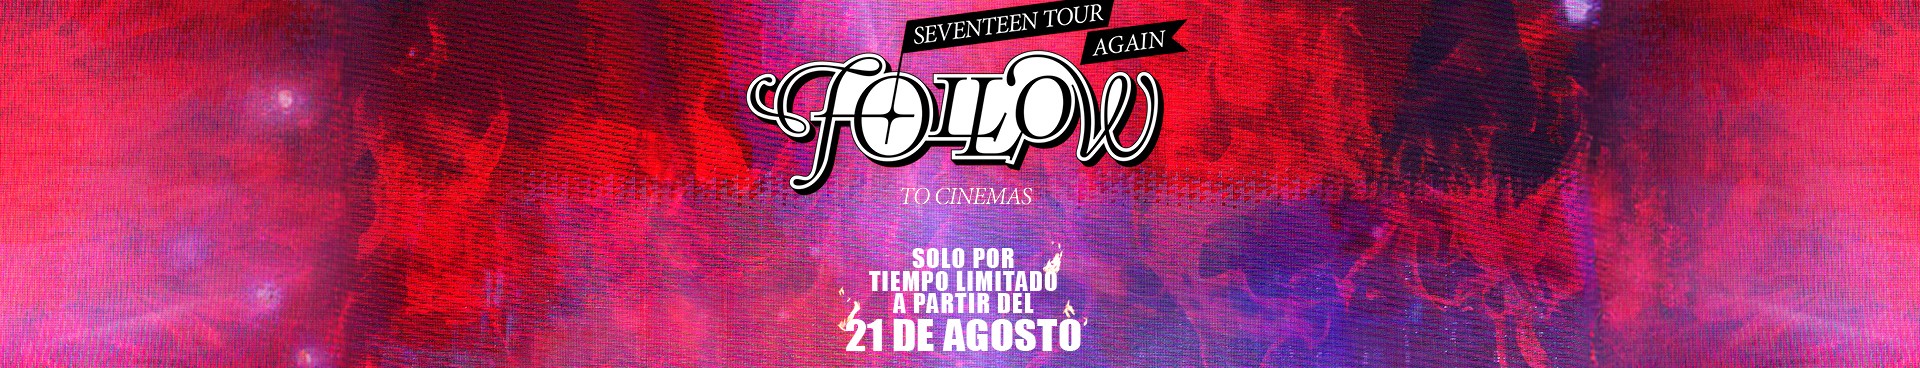 seventeen-tour-follow-nuevamente-en-cines